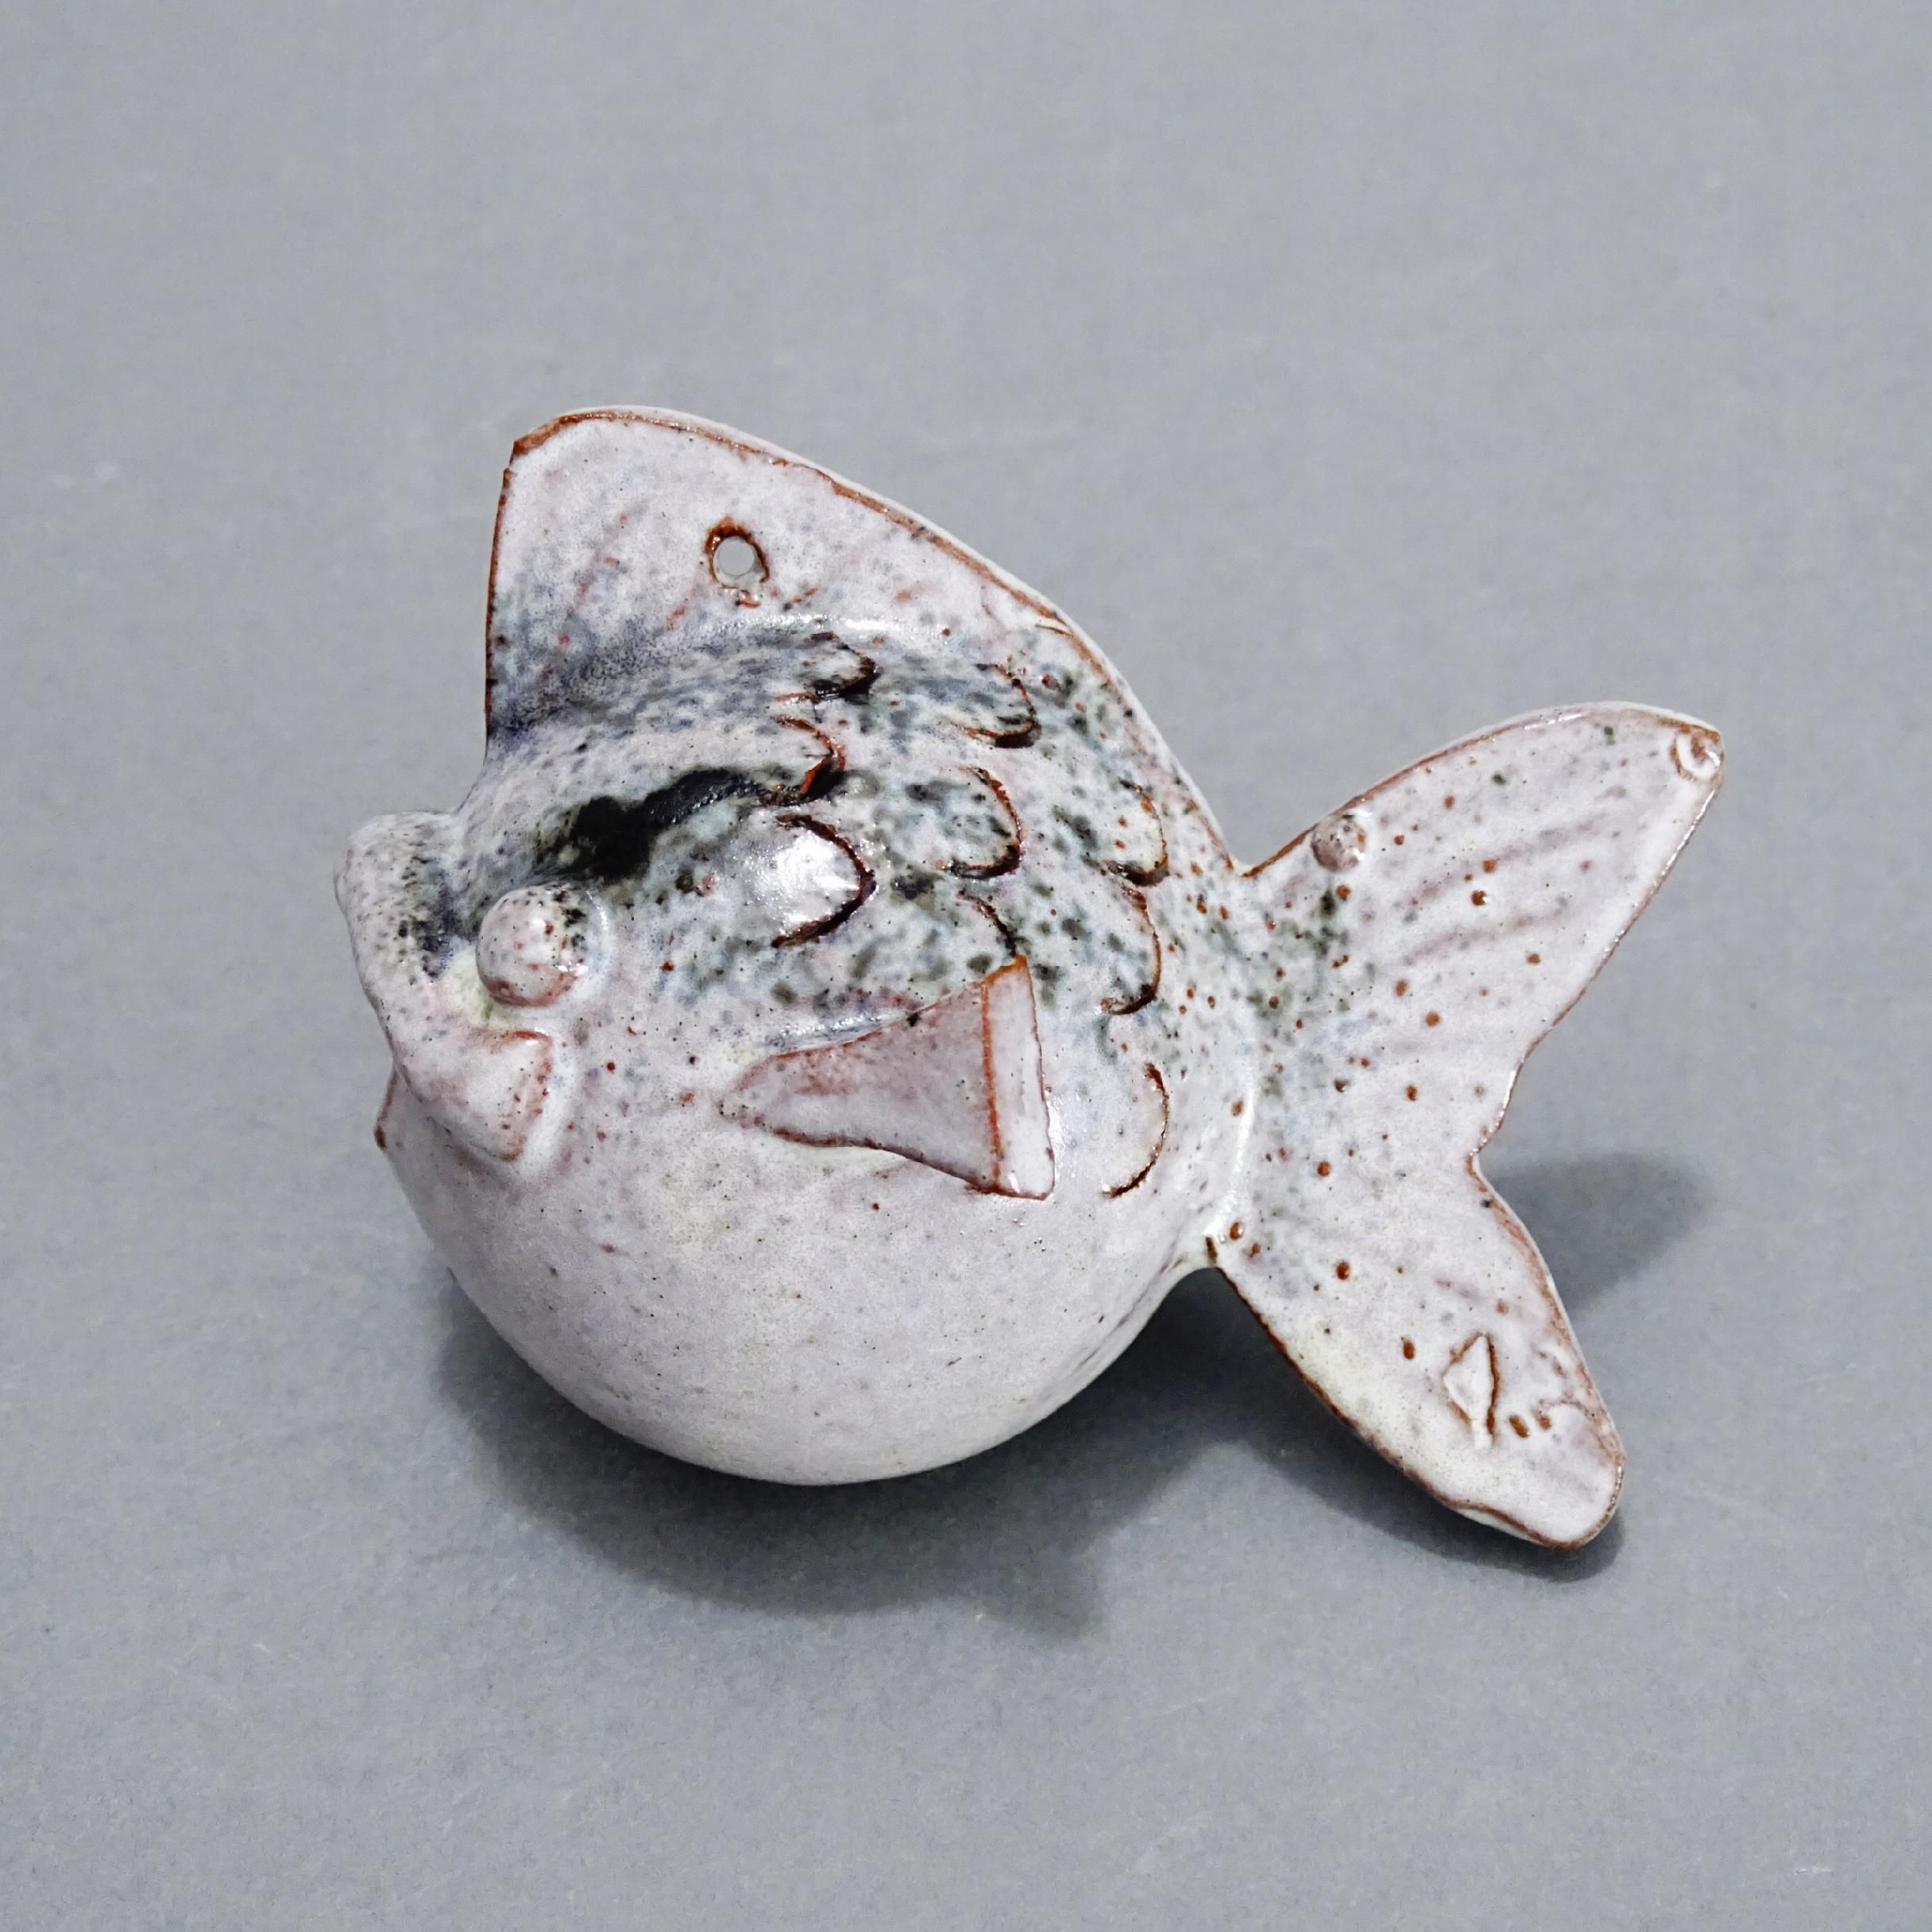 ceramika autorska piękna wieszana figurka ryba